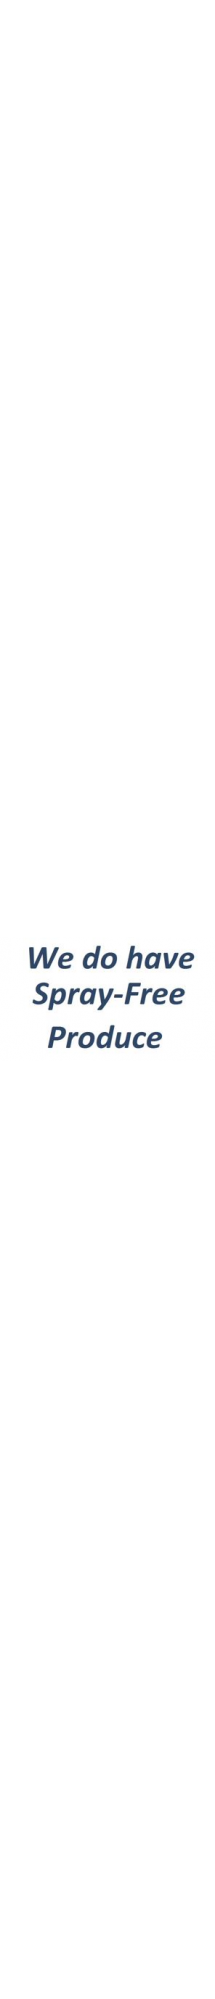 spray free produce